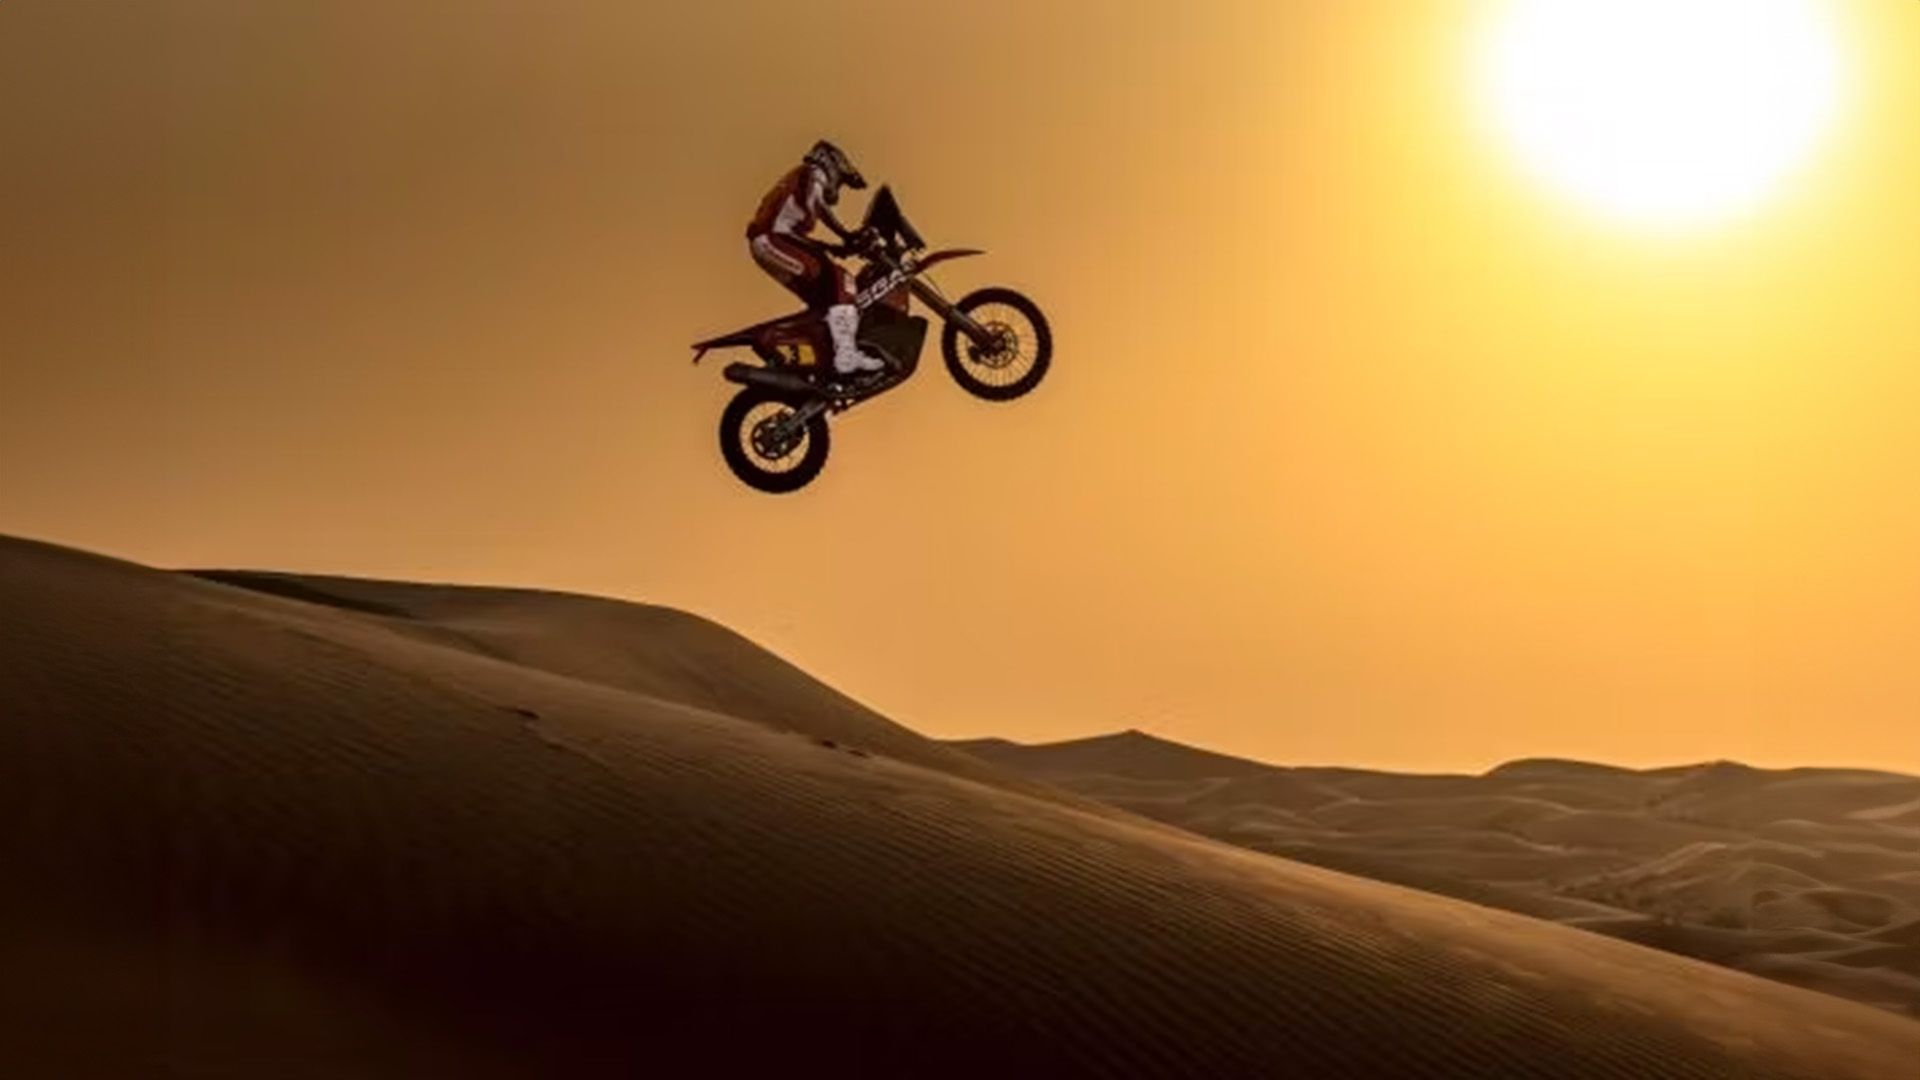 A Dakar Rally motorcycle jumping